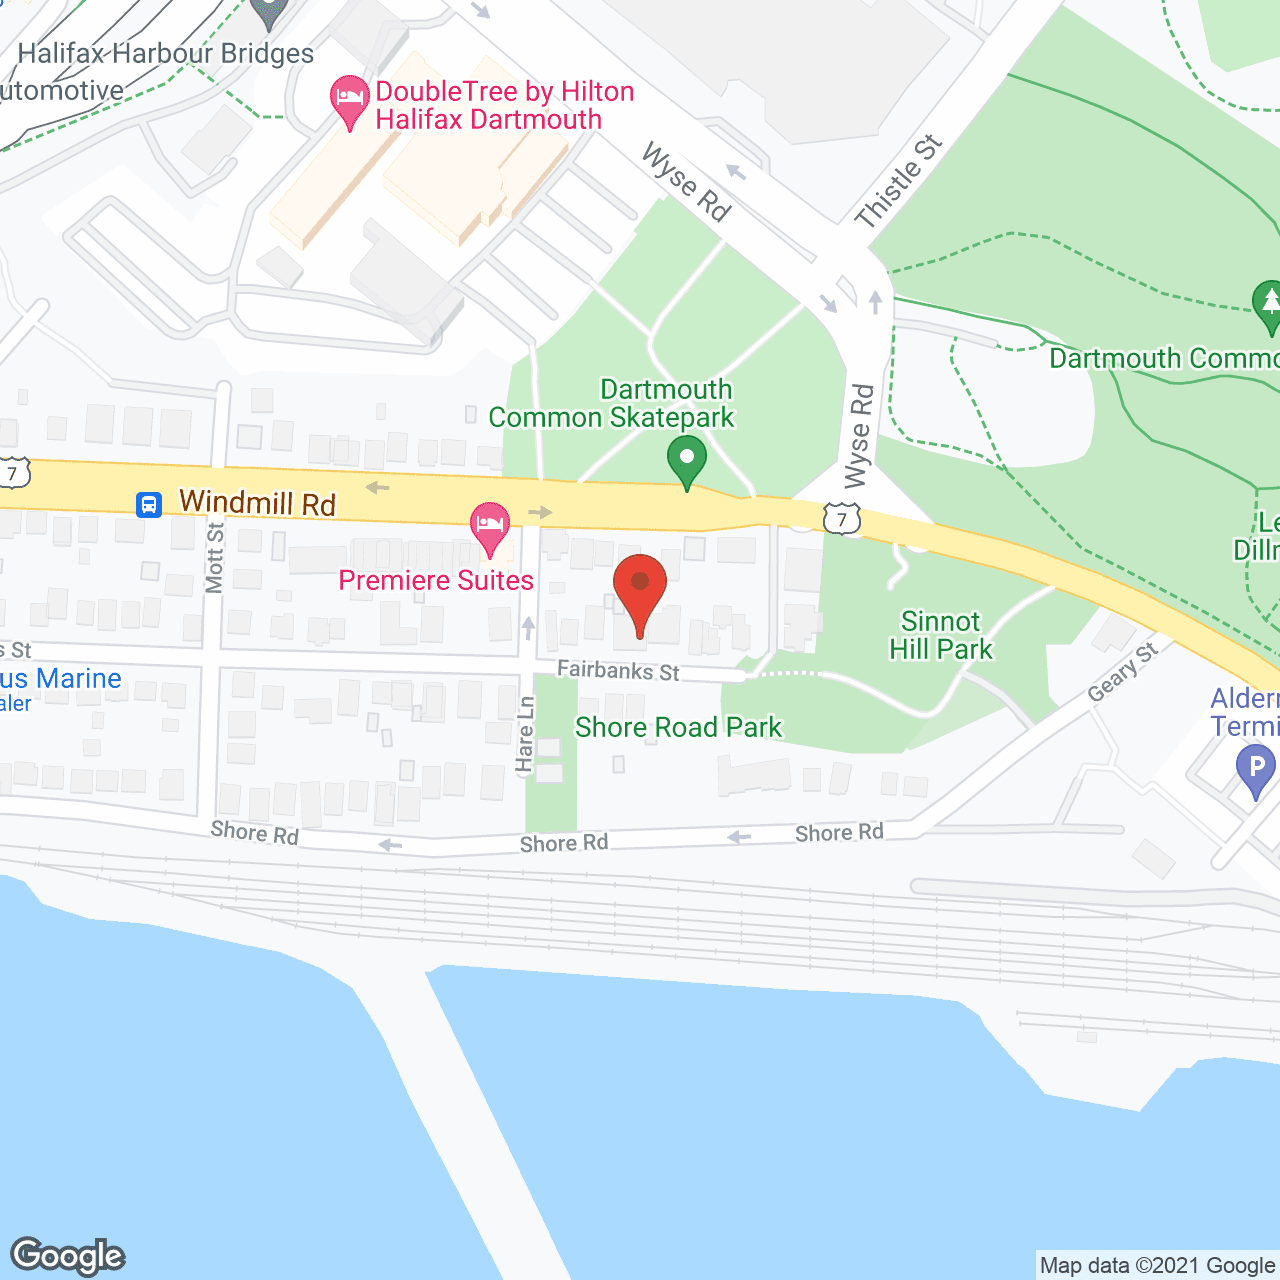 Nantucket Hall in google map